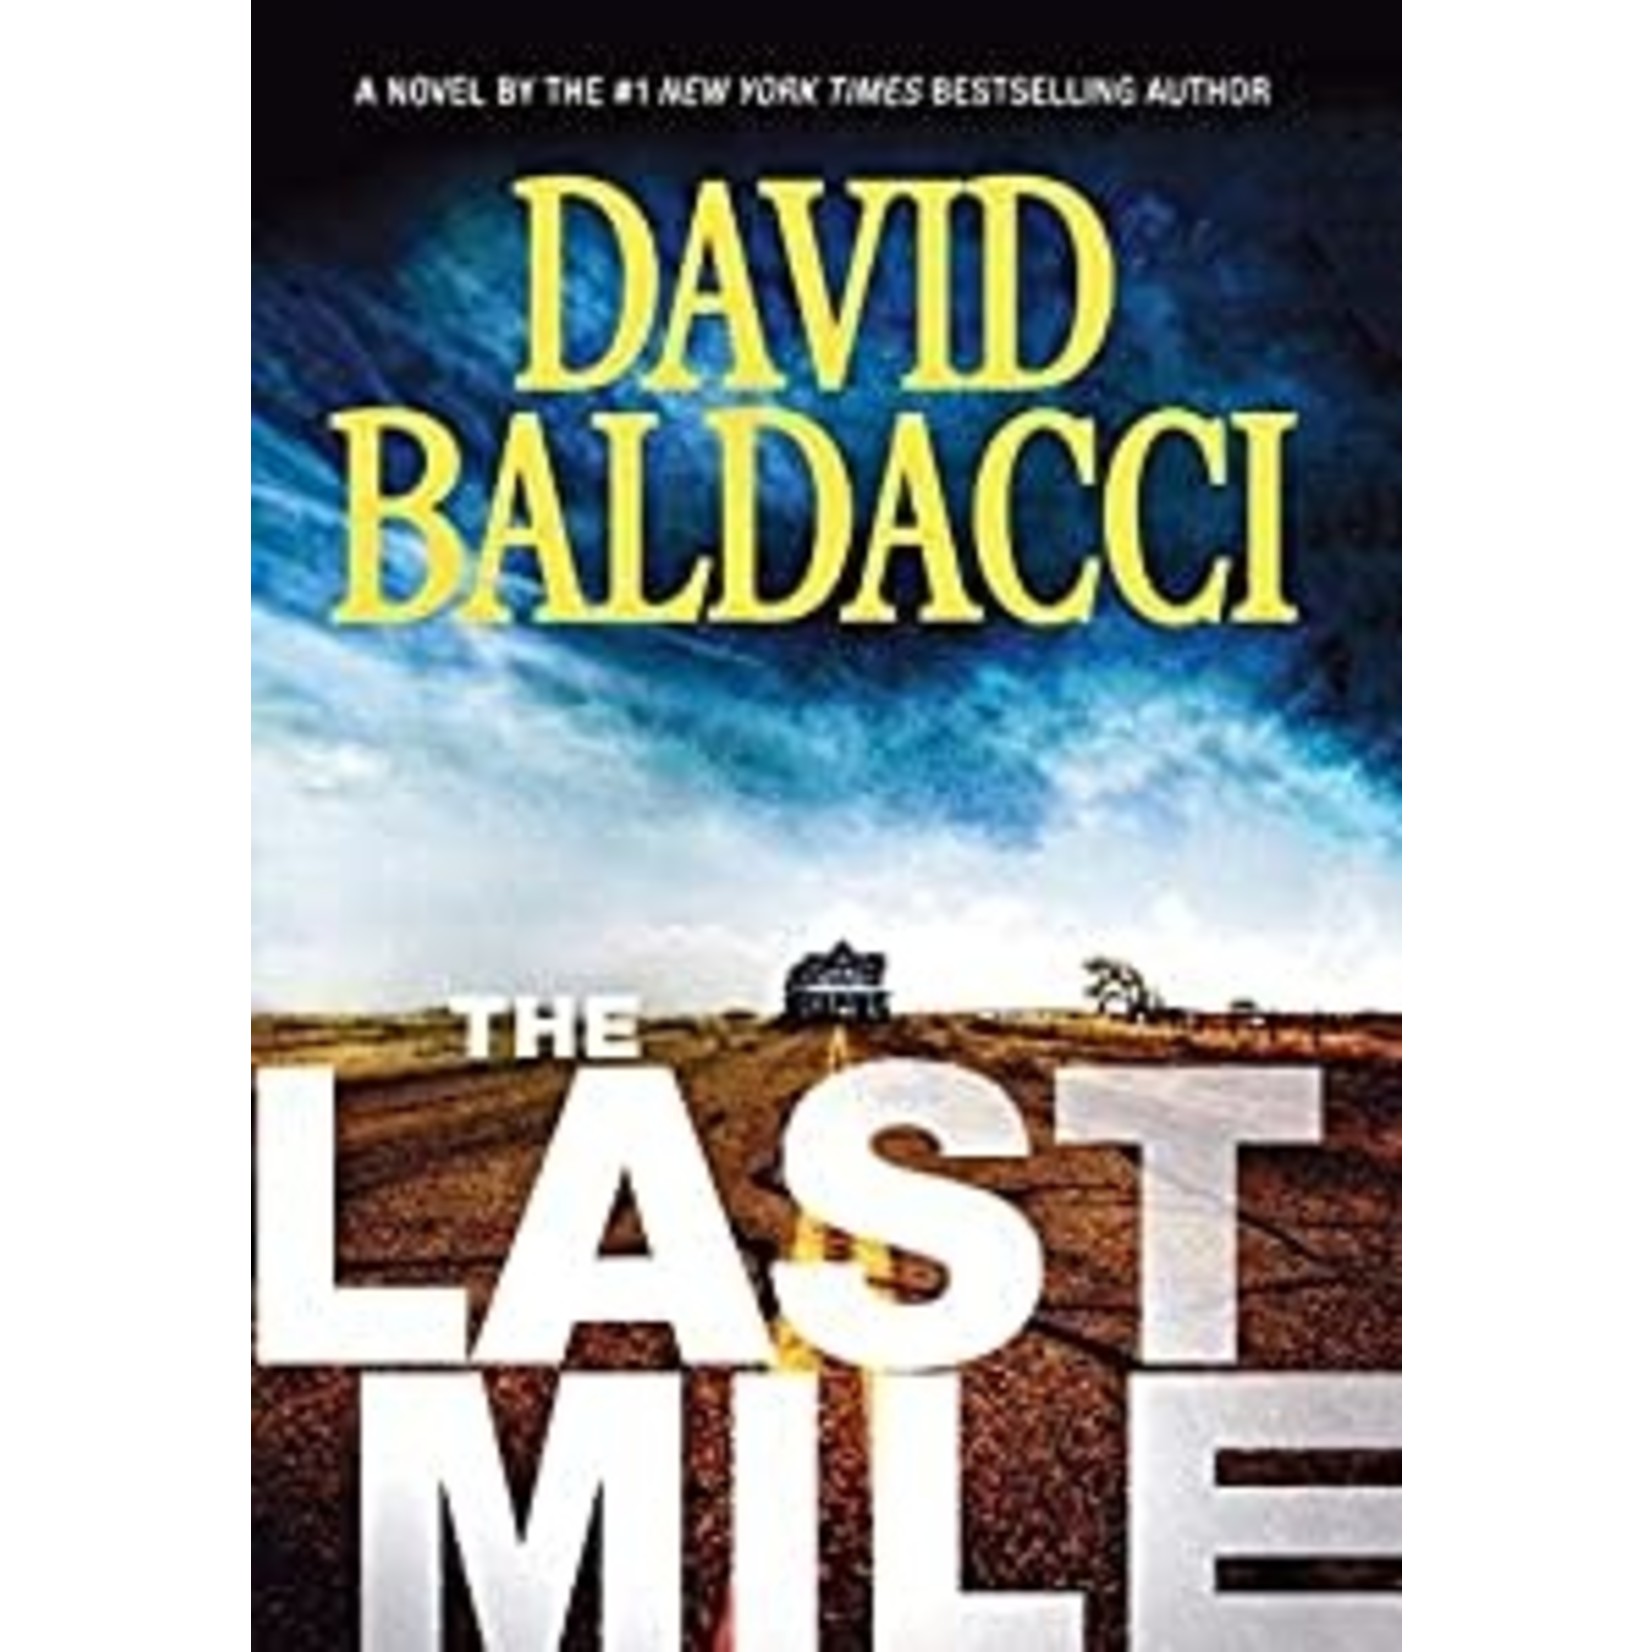 Baldacci, David Baldacci, David - The Last Mile (HC, 1st Edition)